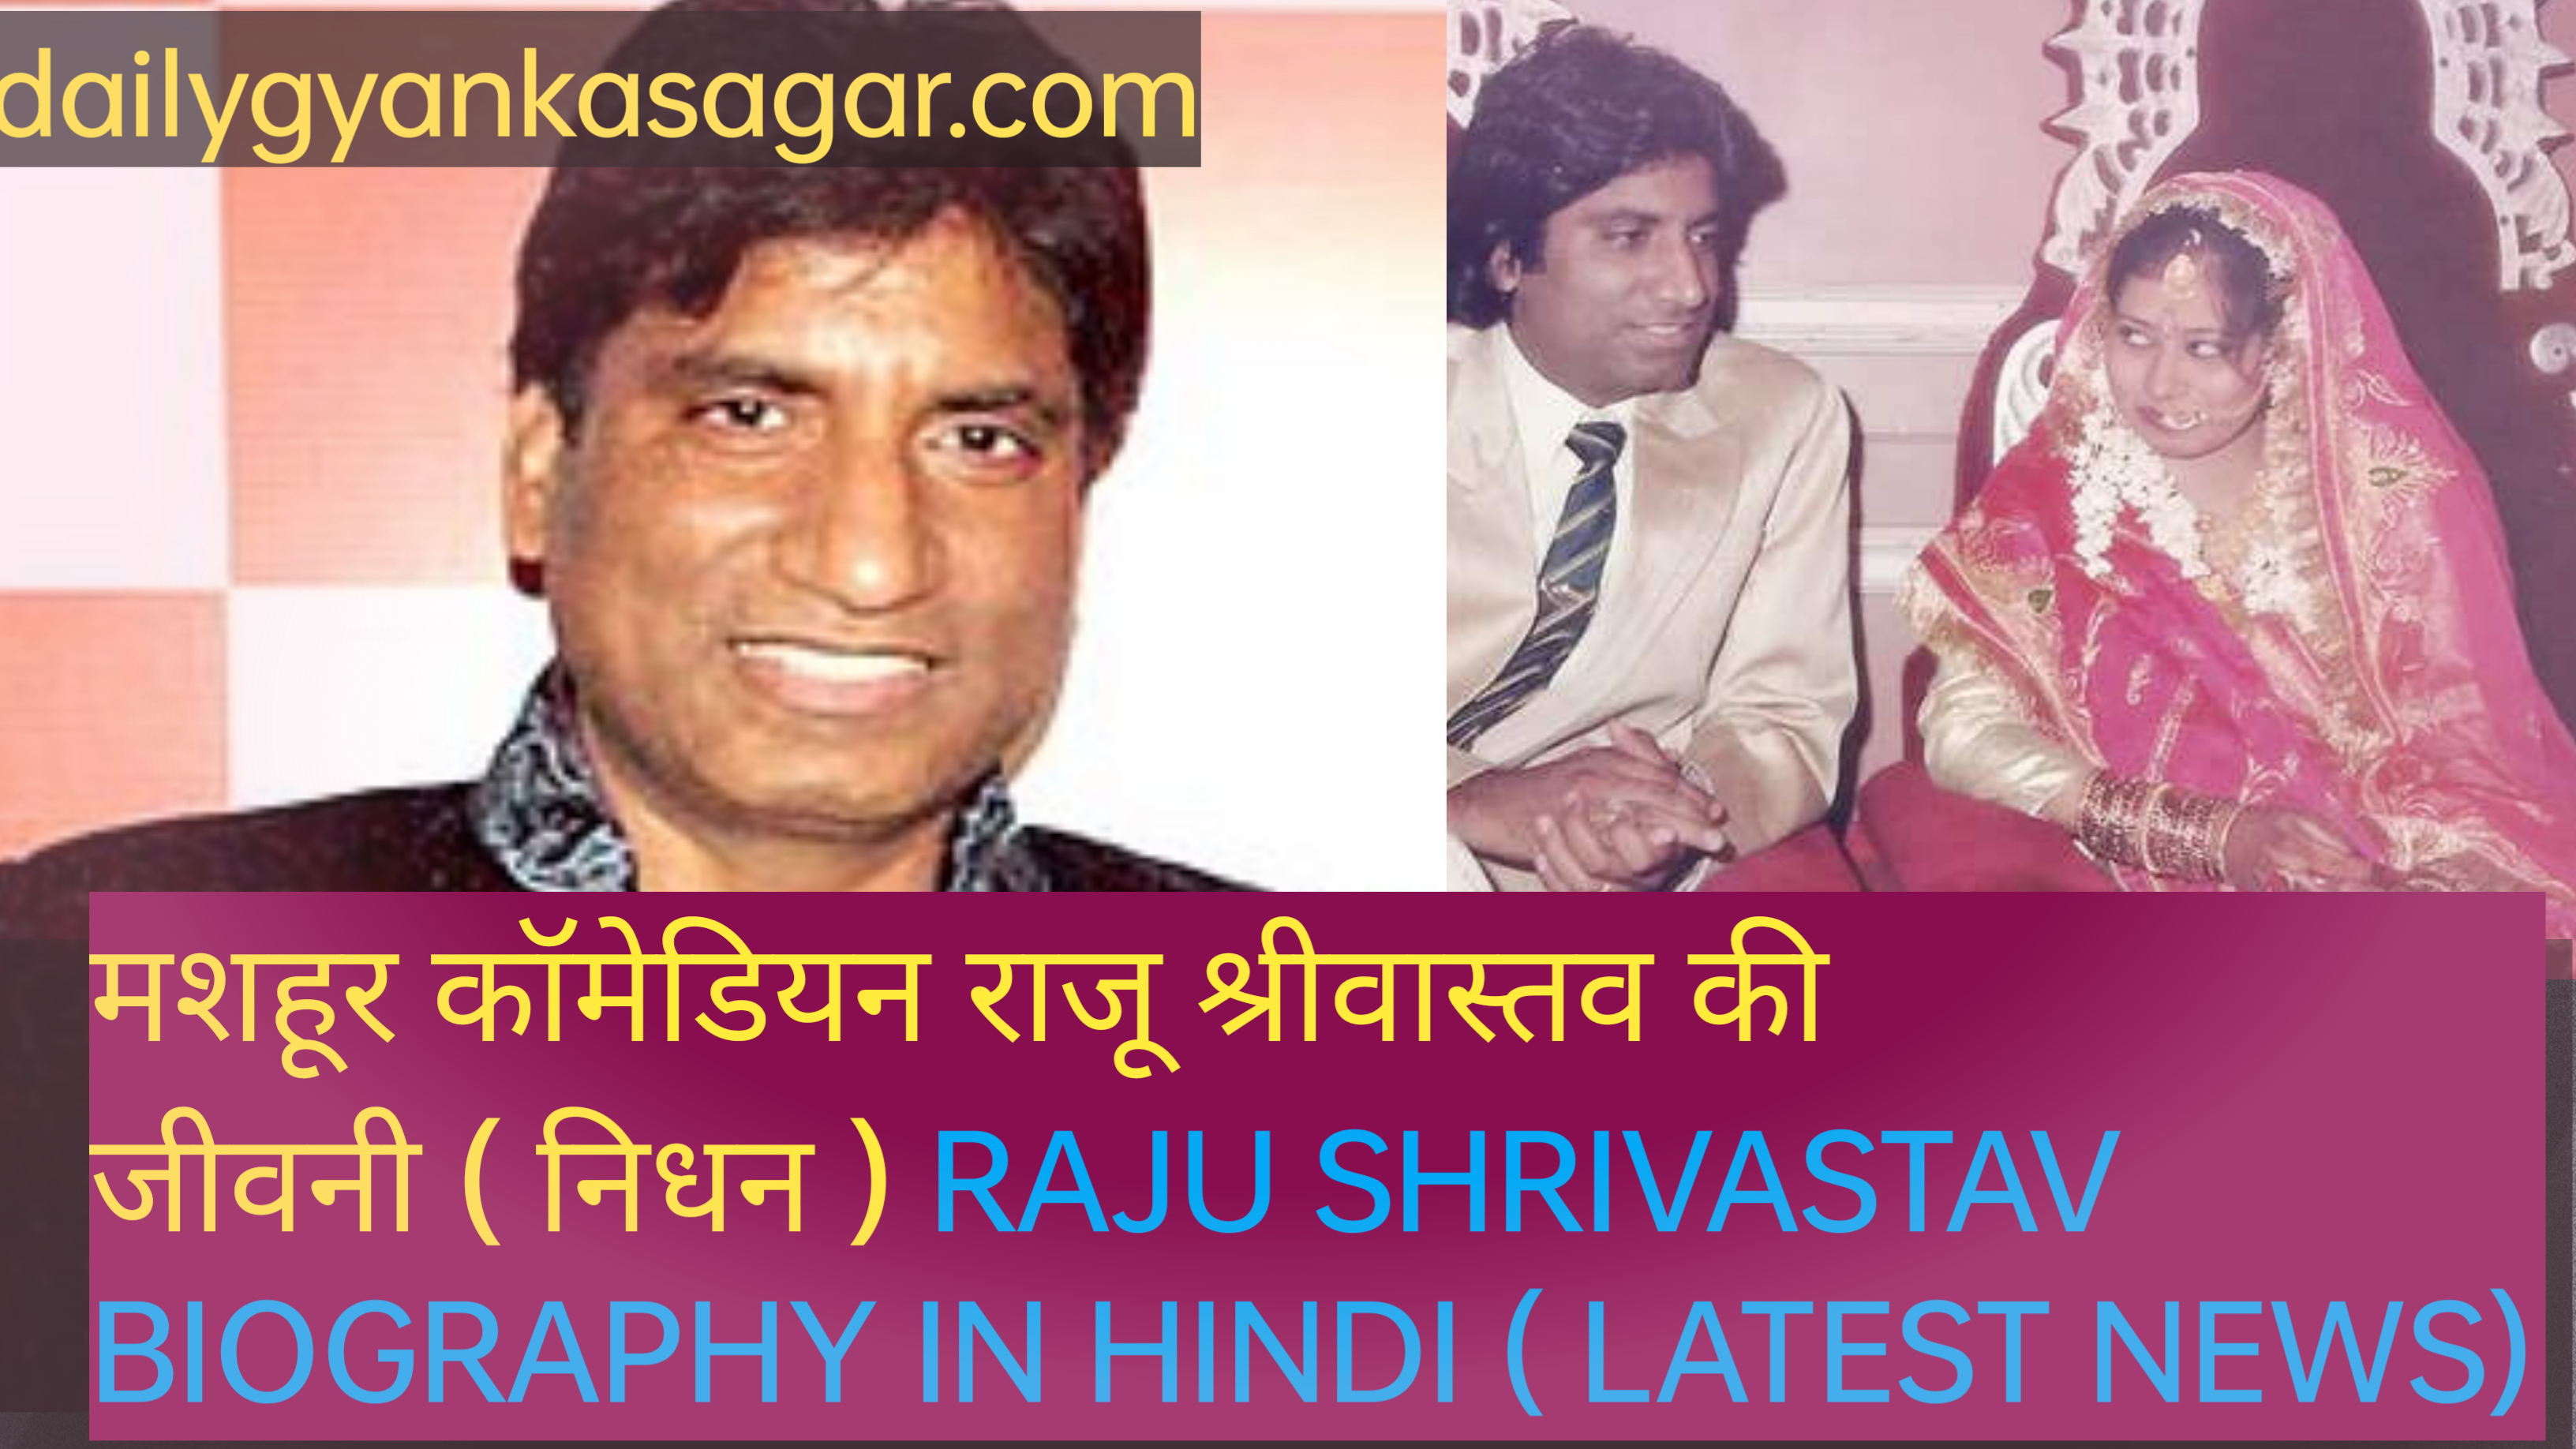 मशहूर कॉमेडियन राजू श्रीवास्तव की जीवनी ( निधन ) Raju shrivtastav biography in Hindi ( latest news)